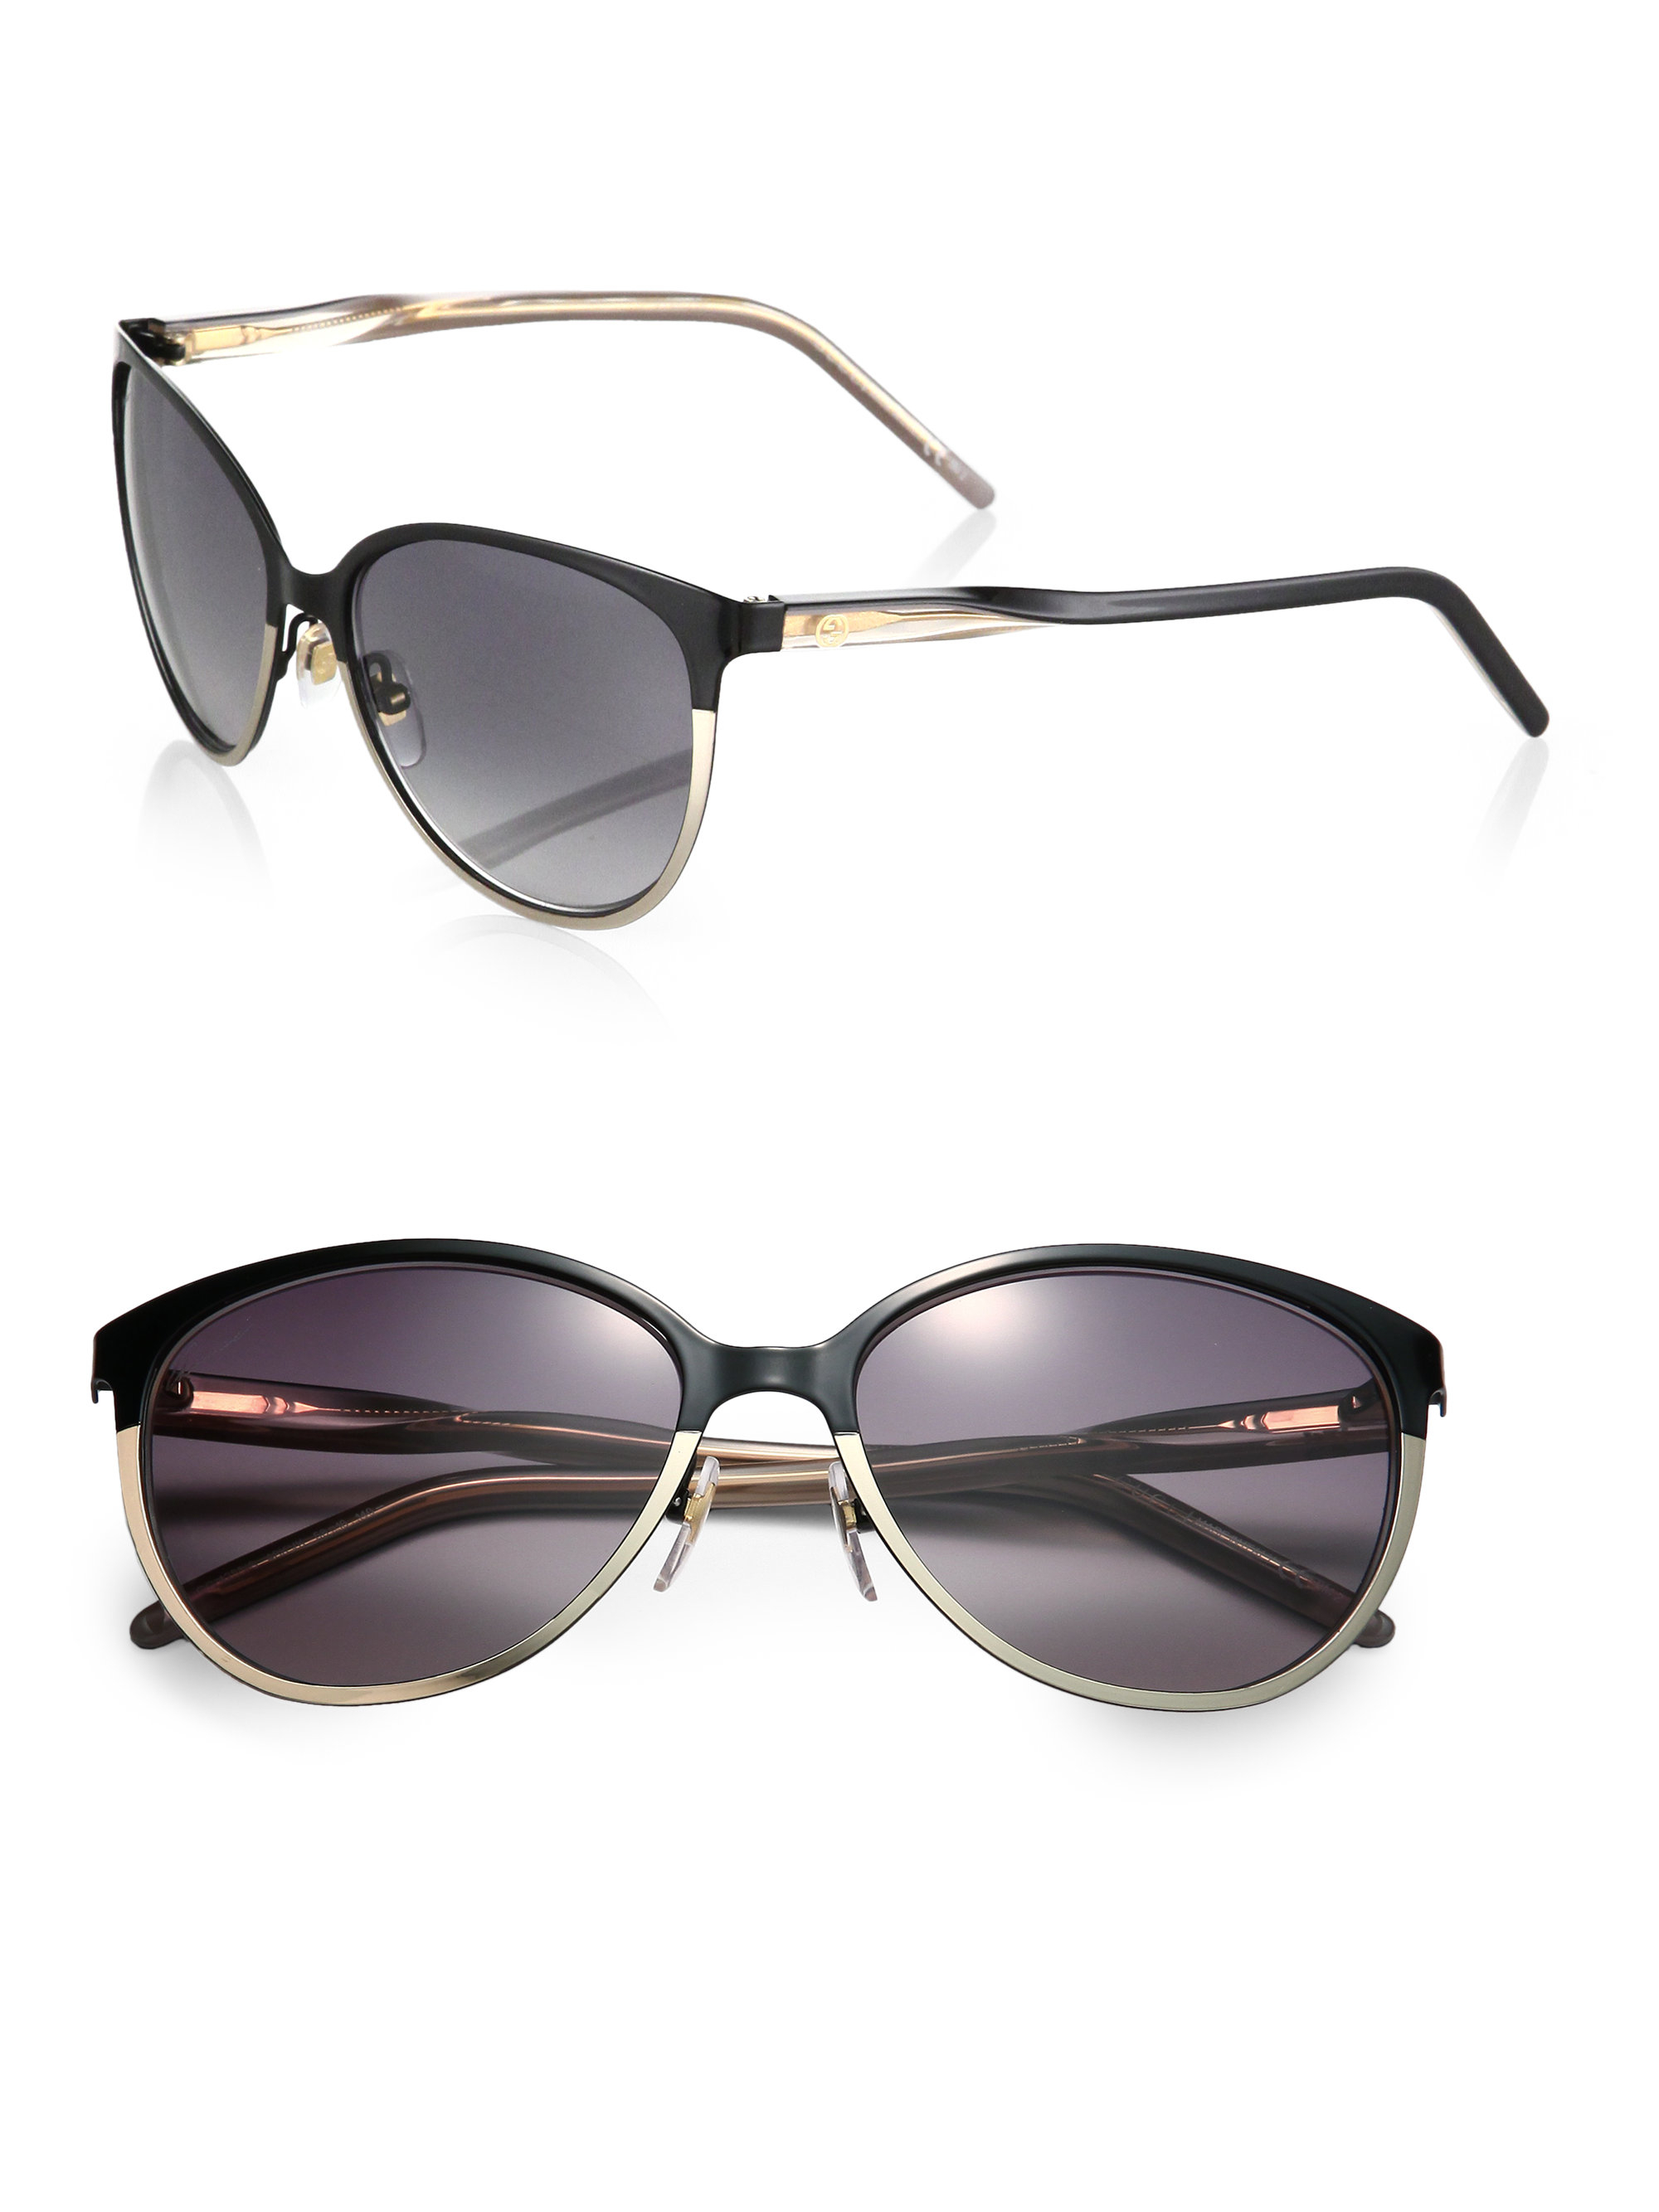 Lyst - Gucci Optyl Round Sunglasses in Black